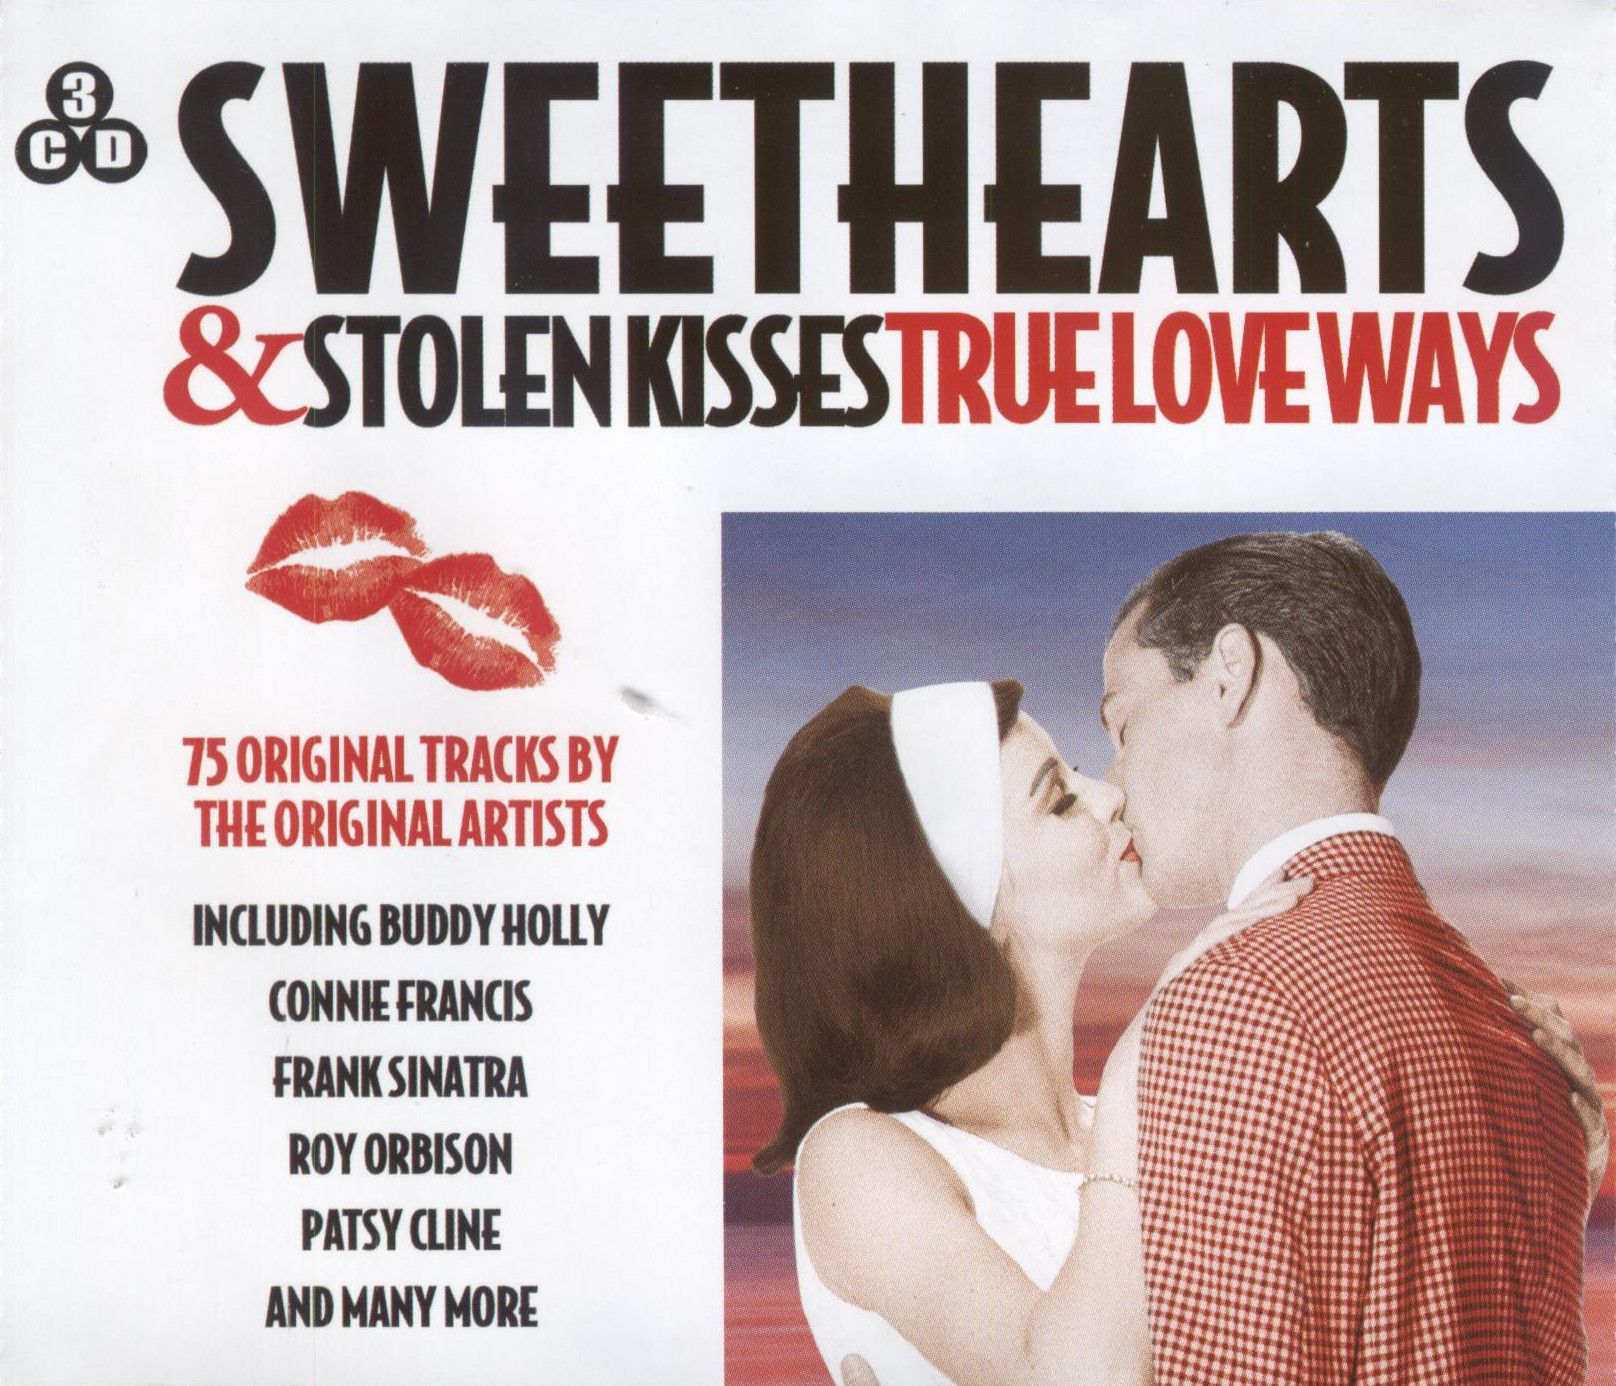 Sweethearts & Stolen Kisses: True Love Ways track art